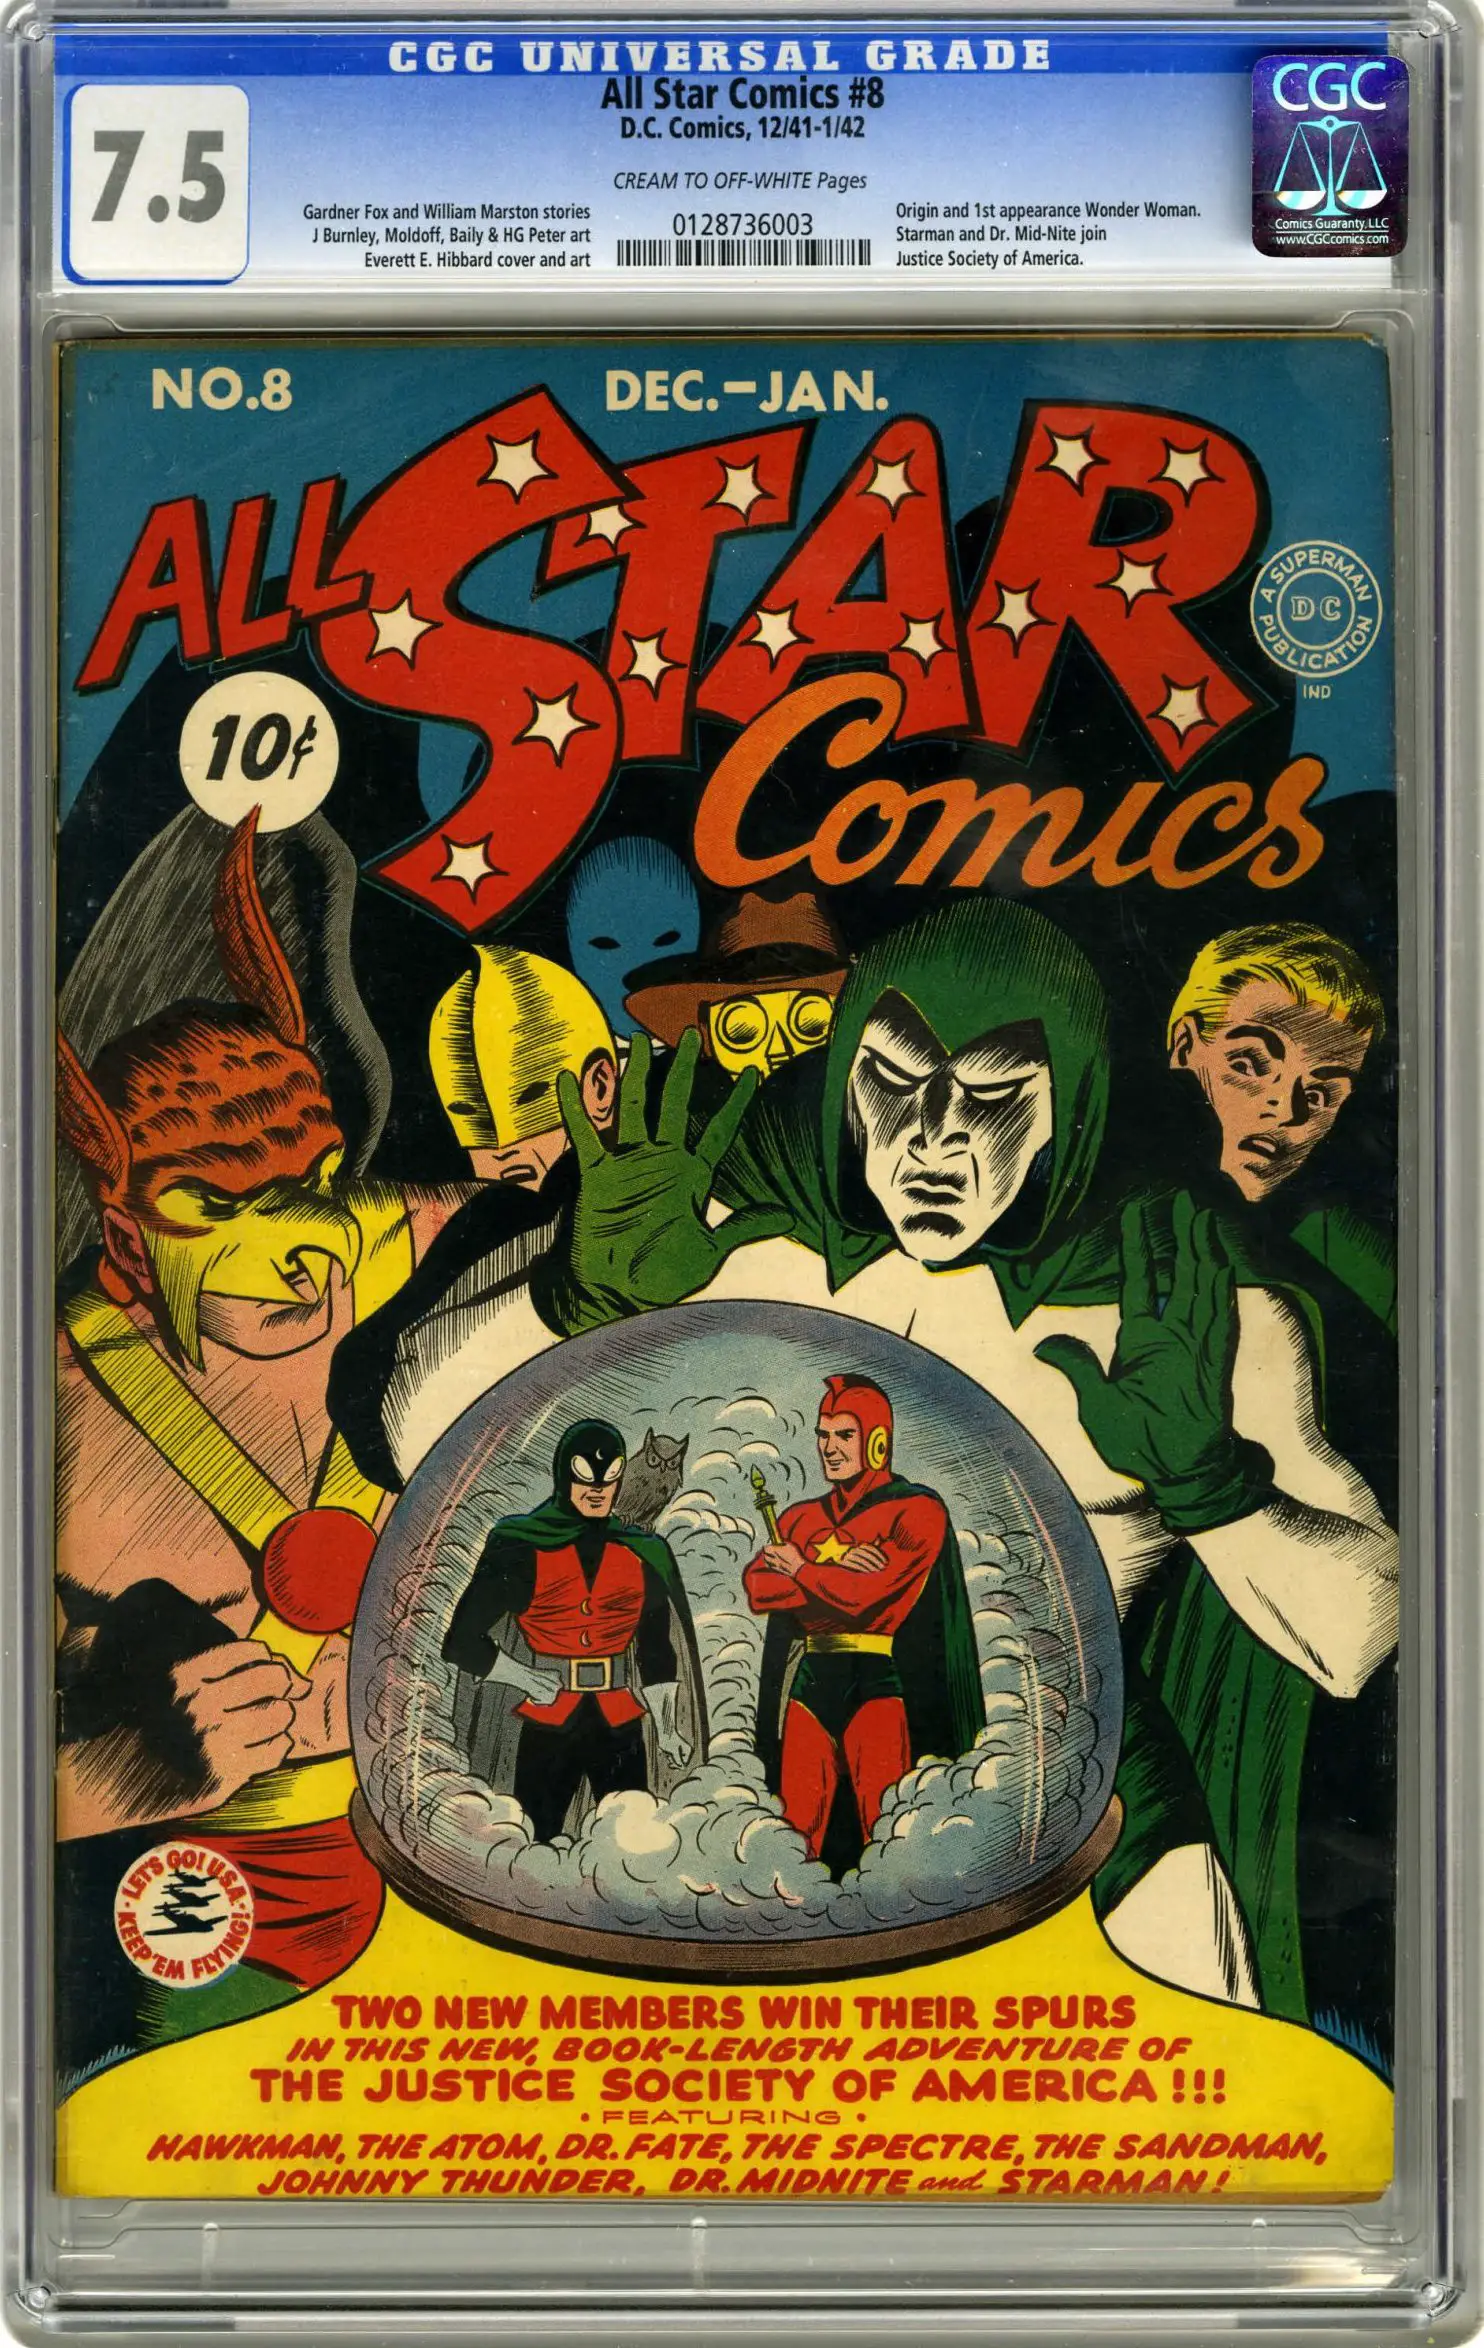 All Star Comics #8 graded CGC 9.4 